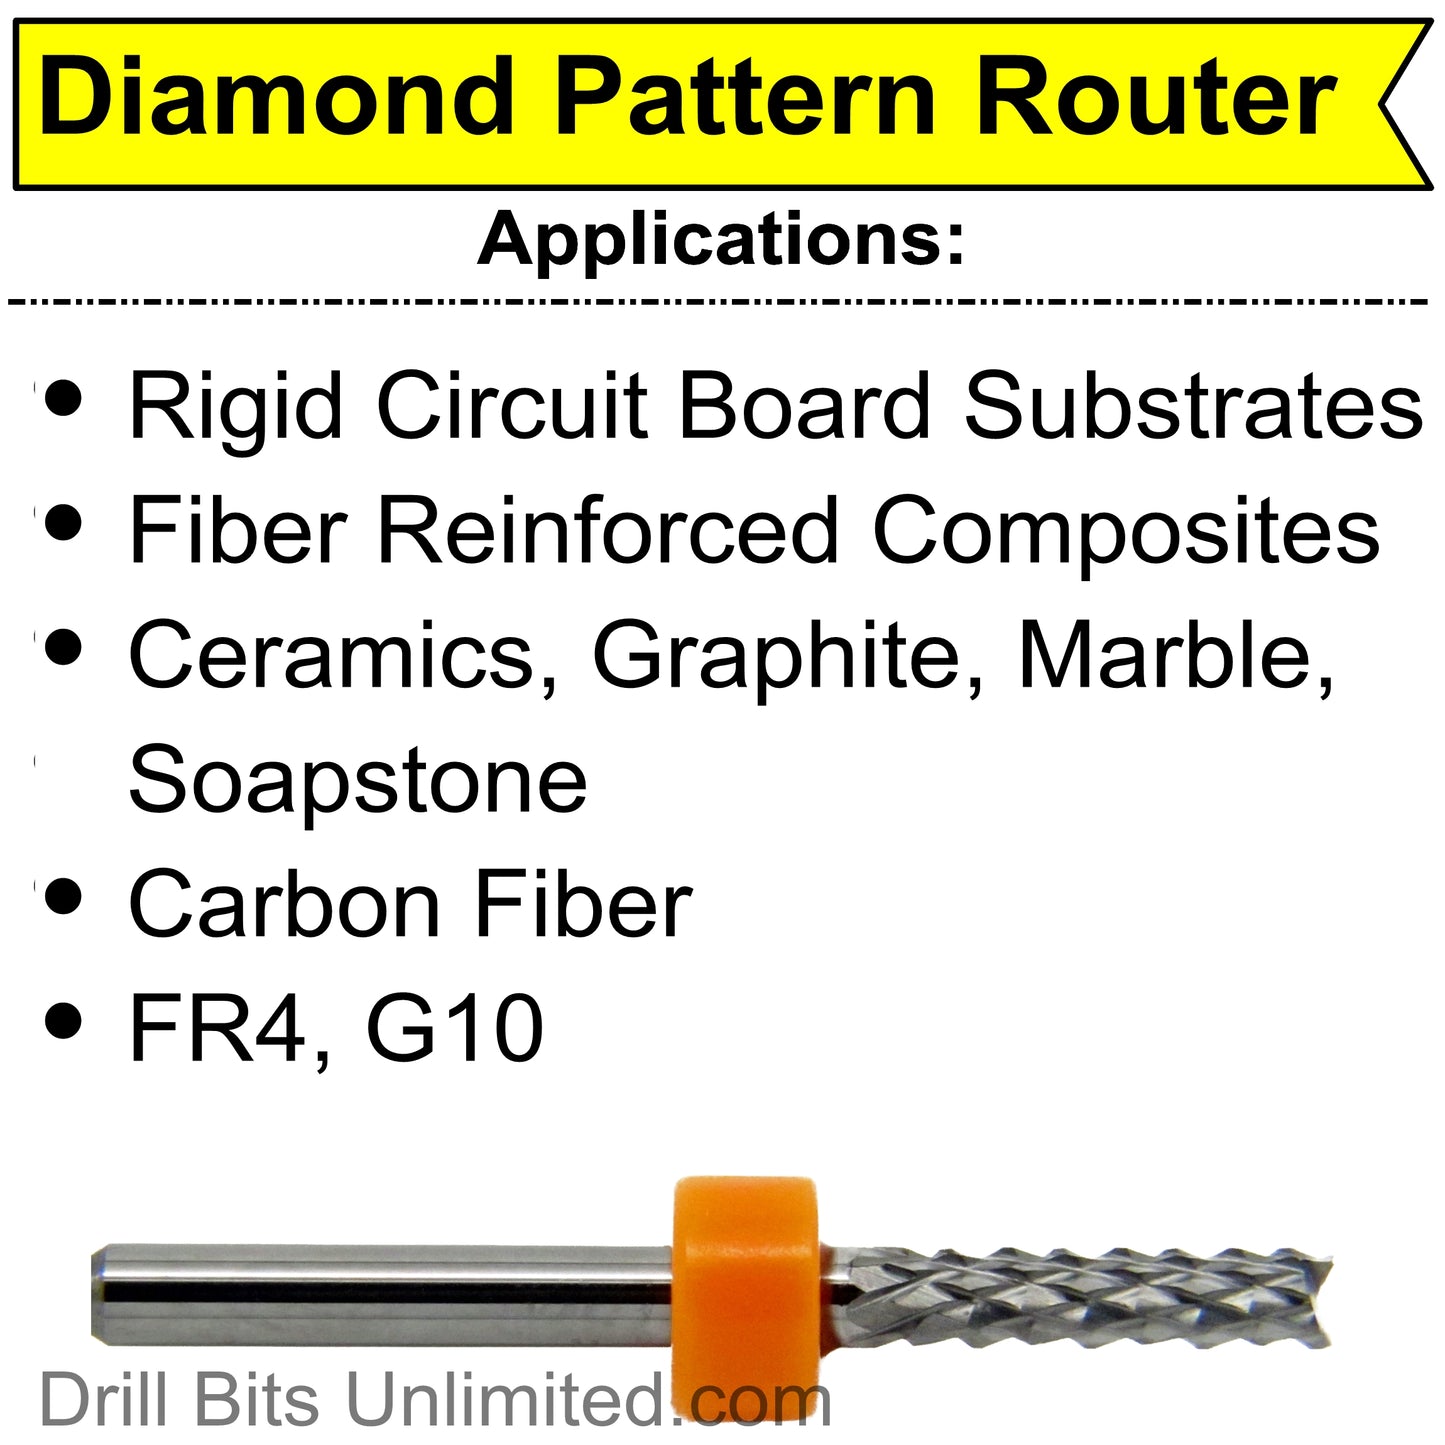 .0945" 3/32" x .500" LOC - Diamond Pattern Router Bit - Drill Point Tip R140